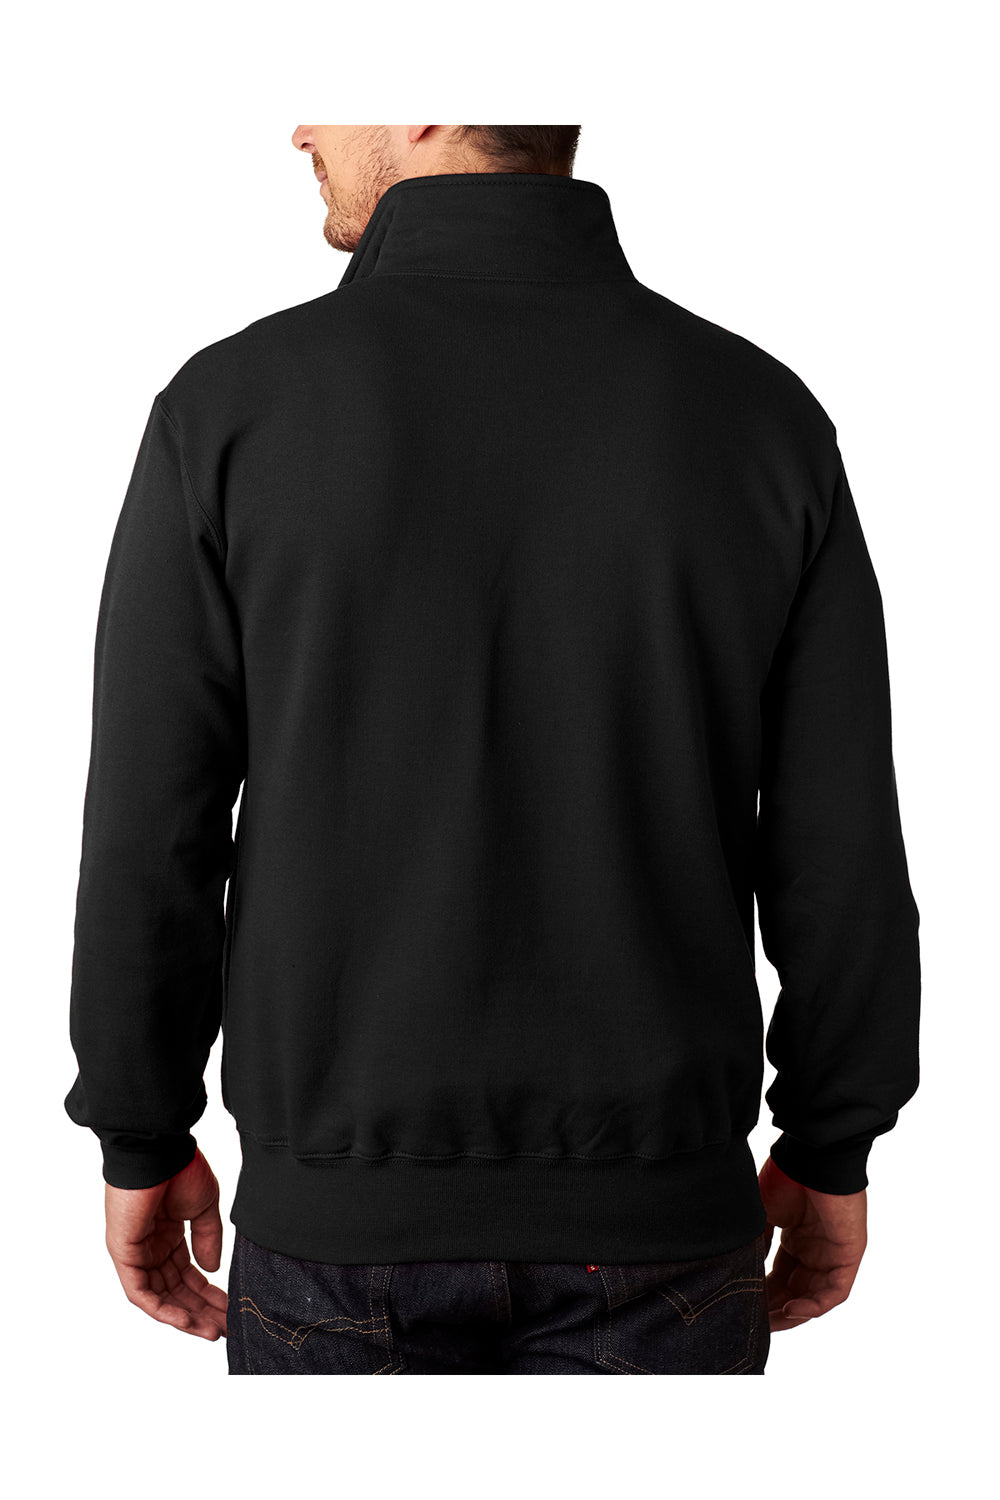 Champion S400 Mens Double Dry Eco Moisture Wicking Fleece 1/4 Zip Sweatshirt Black Back